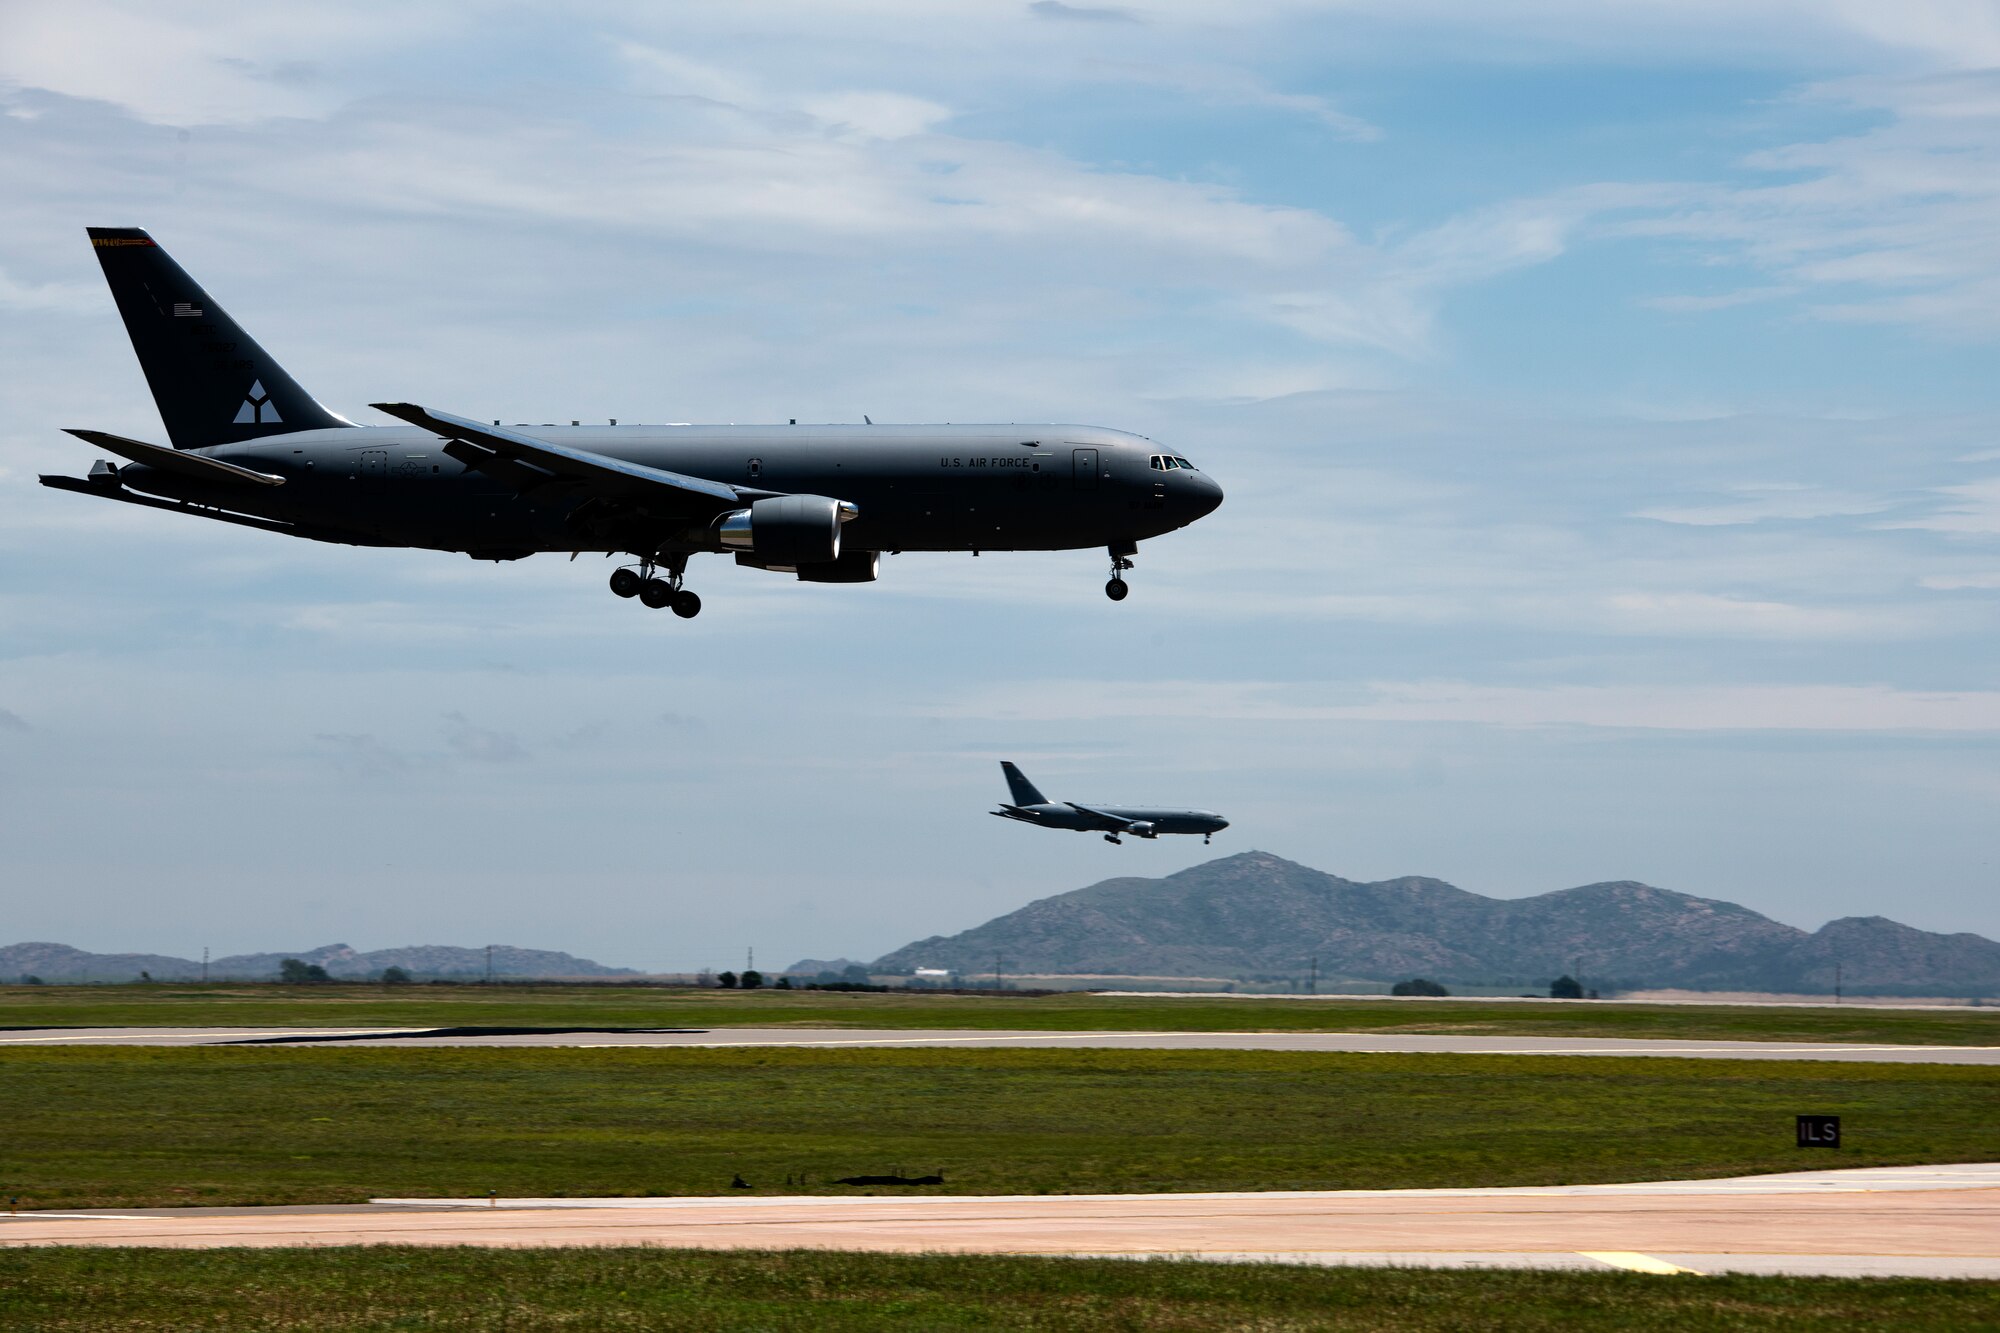 U.S. Air Force KC-46 Pegasus aircraft land on the runway at Altus Air Force Base, Oklahoma, during a large formation exercise, May 21, 2020.